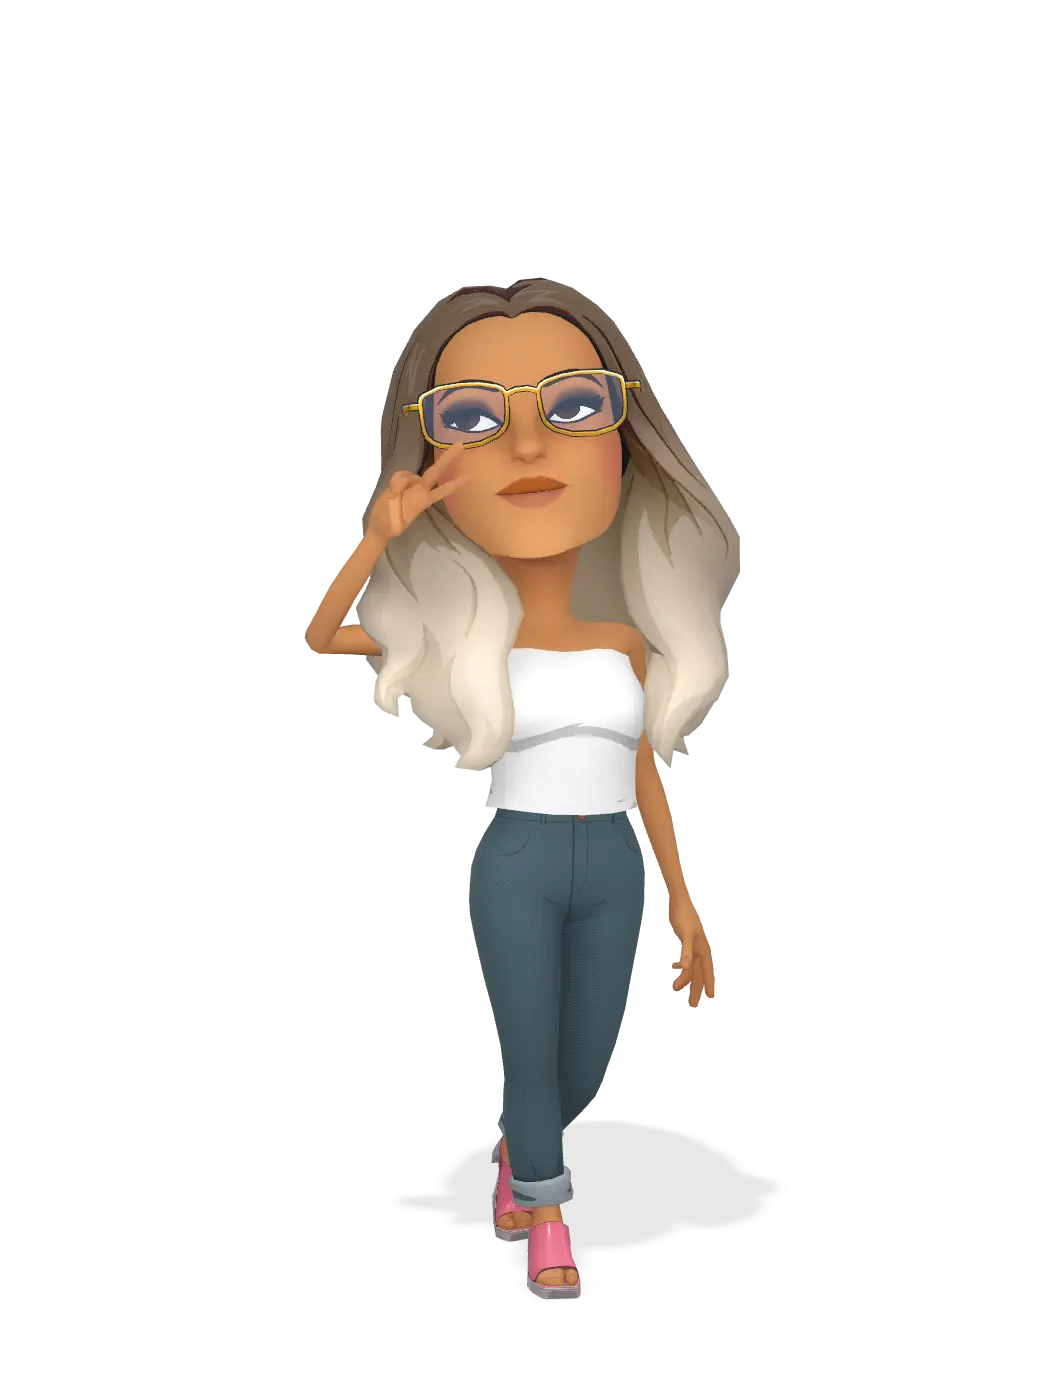 3D Bitmoji for maymakebeauty avatar